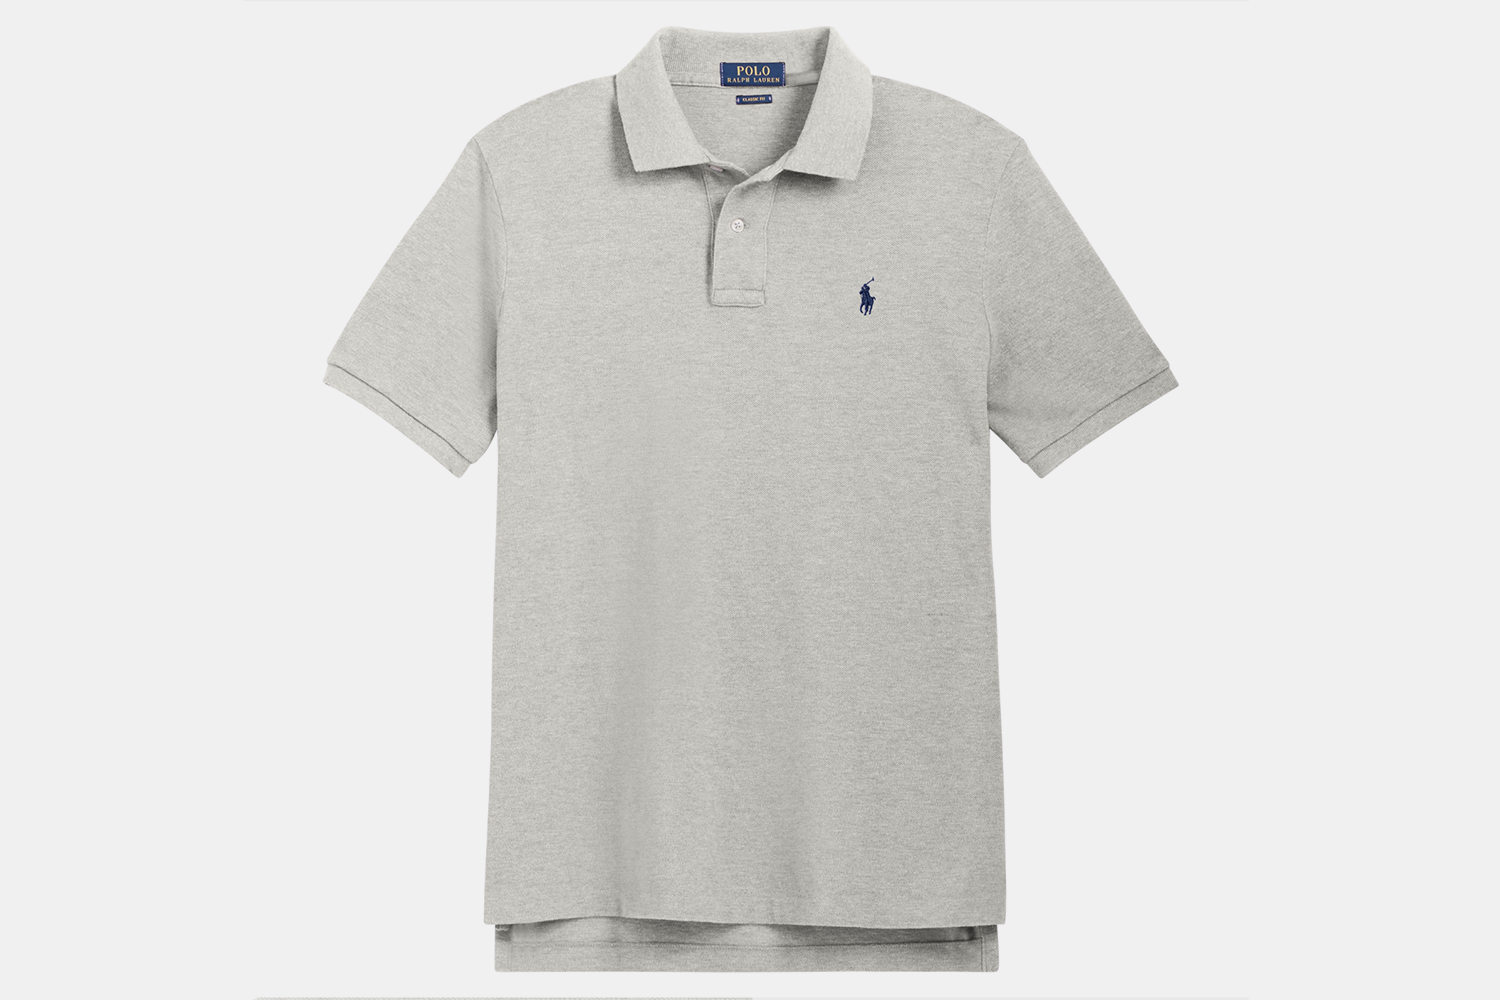 Every Polo Shirt Logo Ranked Insidehook